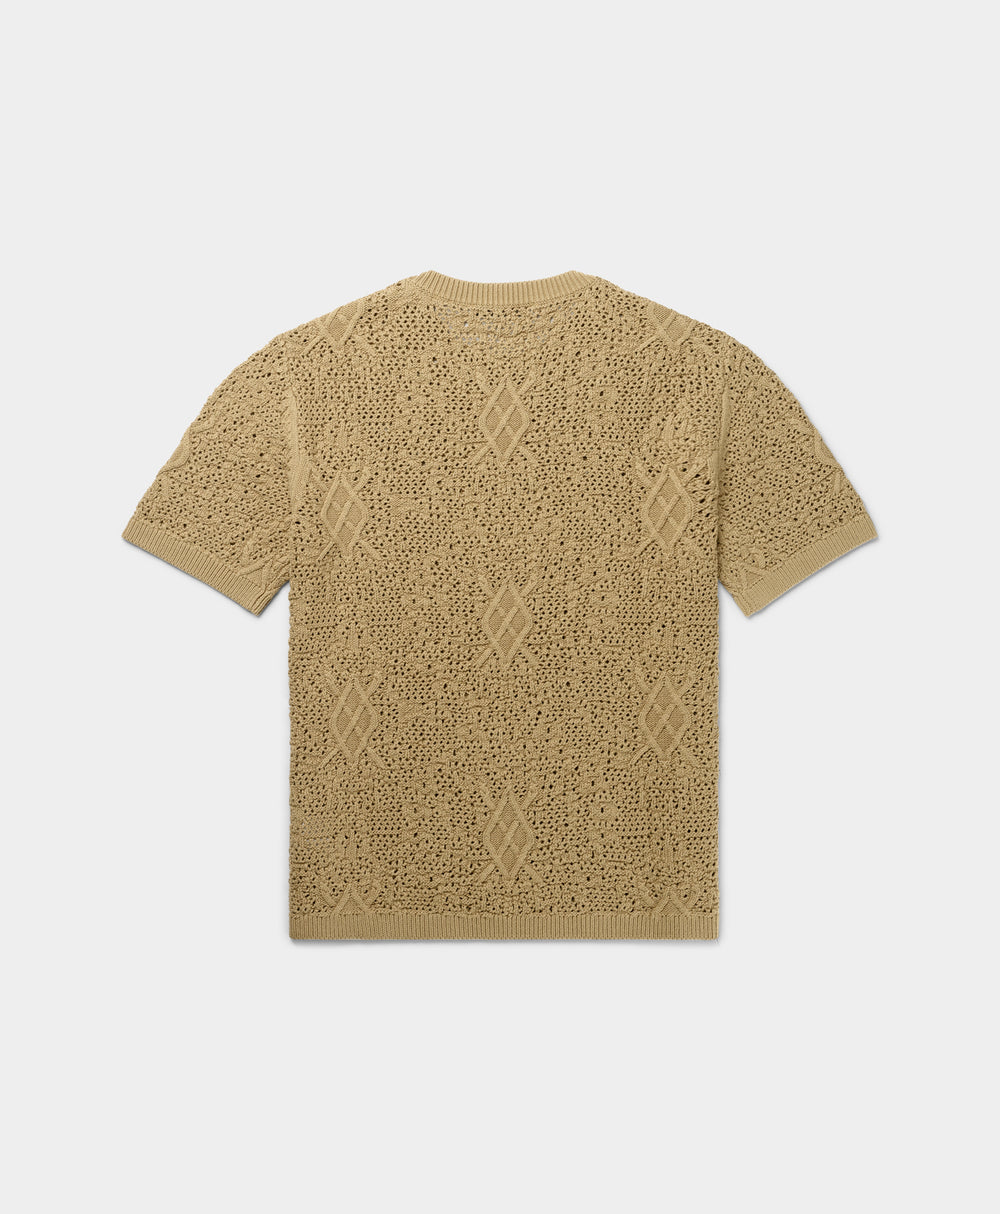 DP - Twill Beige Shield Crochet T-Shirt - Packshot - Rear